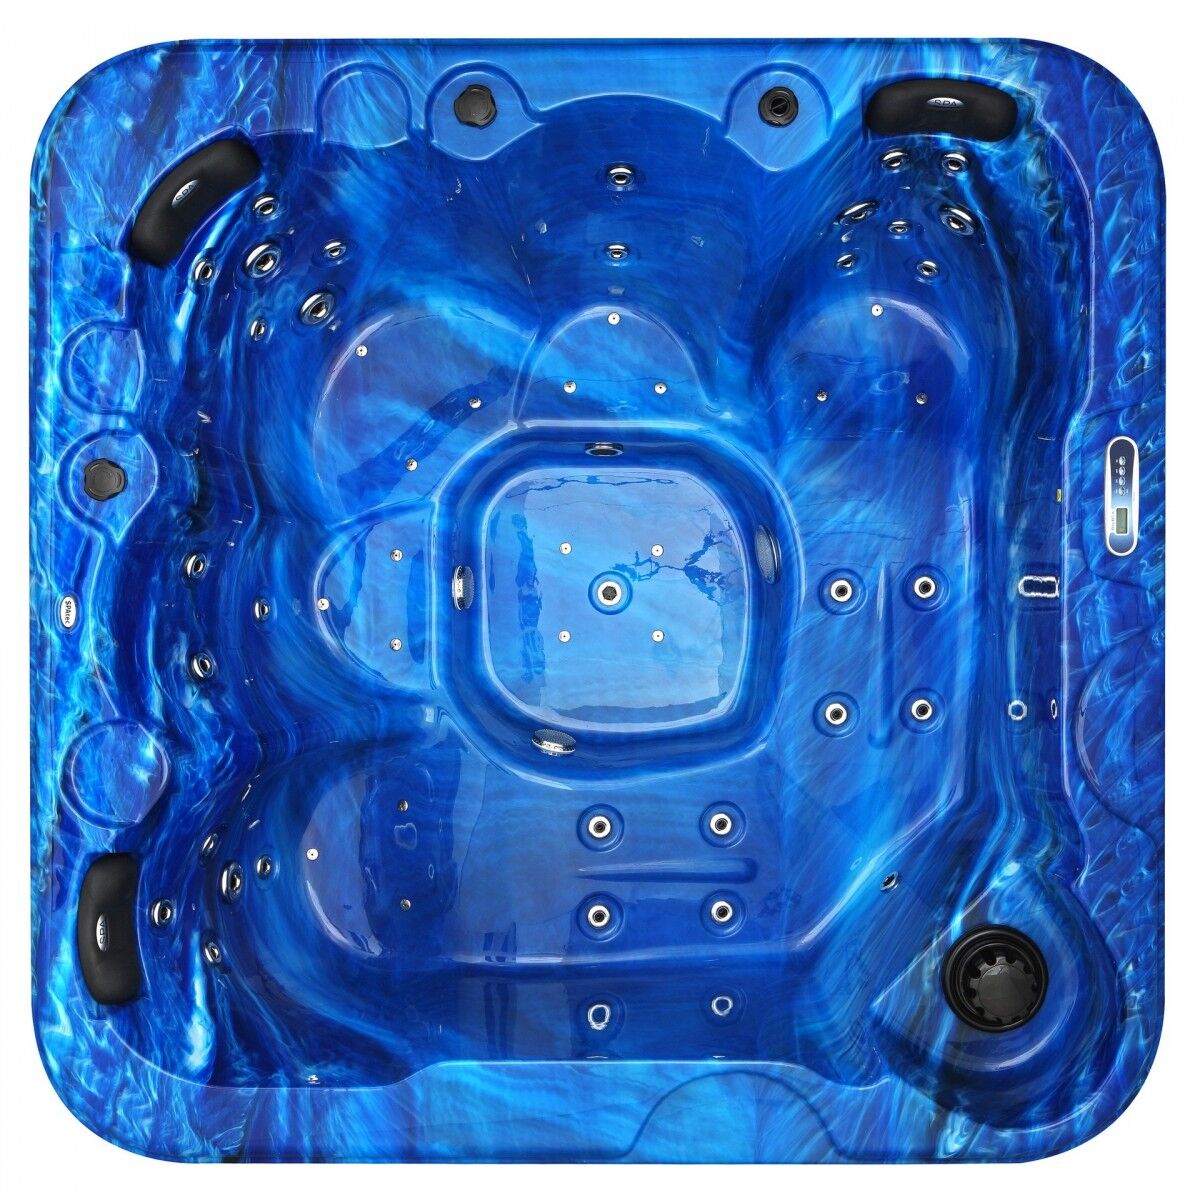 Spatec Jacuzzi Outdoor Whirlpools - SPAtec 700B blau